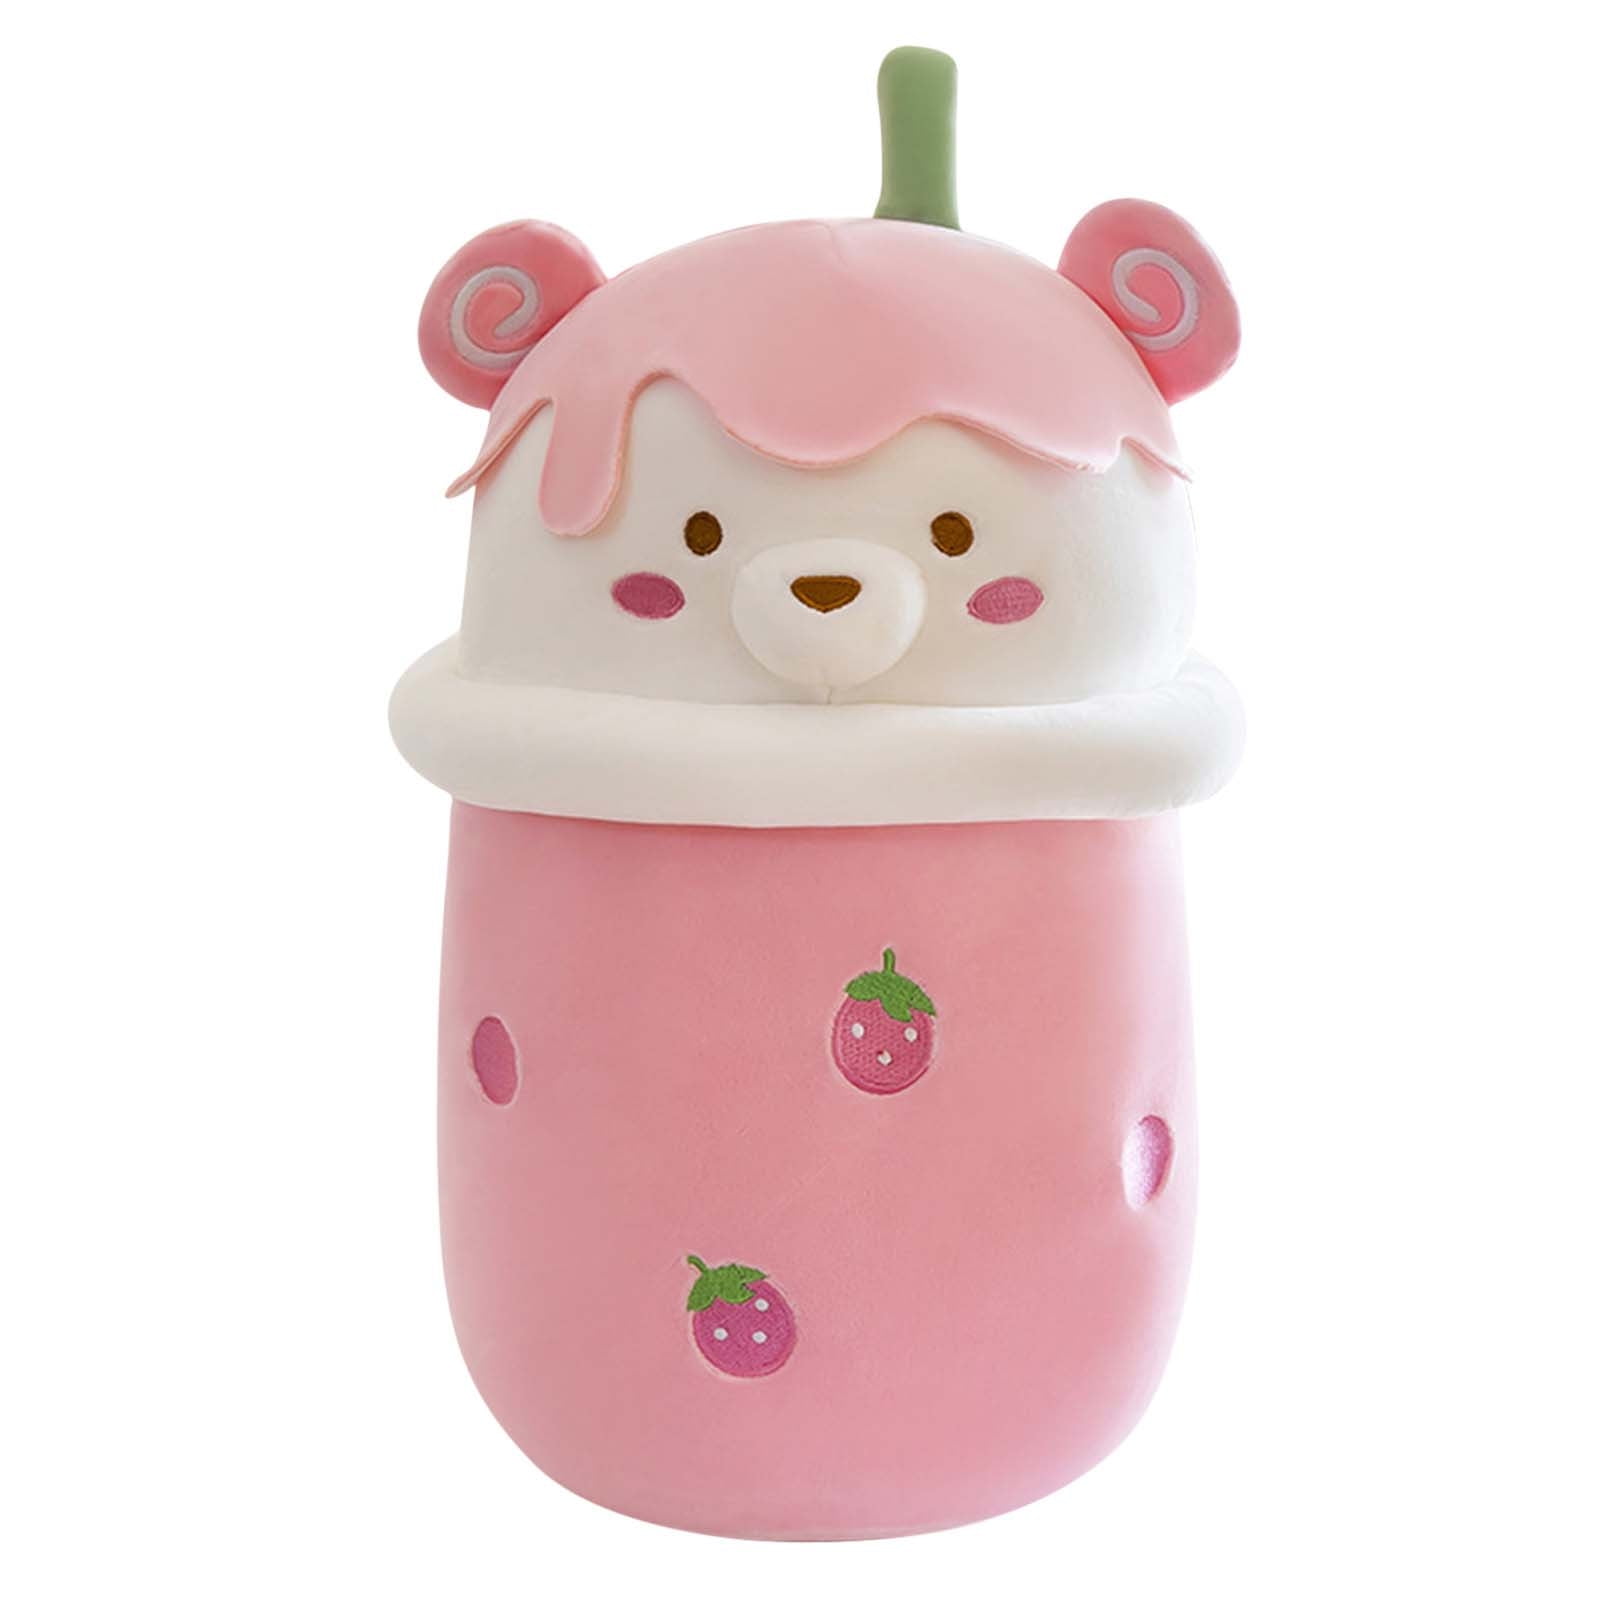 Fridja 13.8 inch Cute Stuffed Boba Plush Bubble Tea Plushie Pillow Milk Tea  Cup Pillow Panda Plush, Soft Kawaii Hugging Plush Toys Gifts for Kids, Pink  